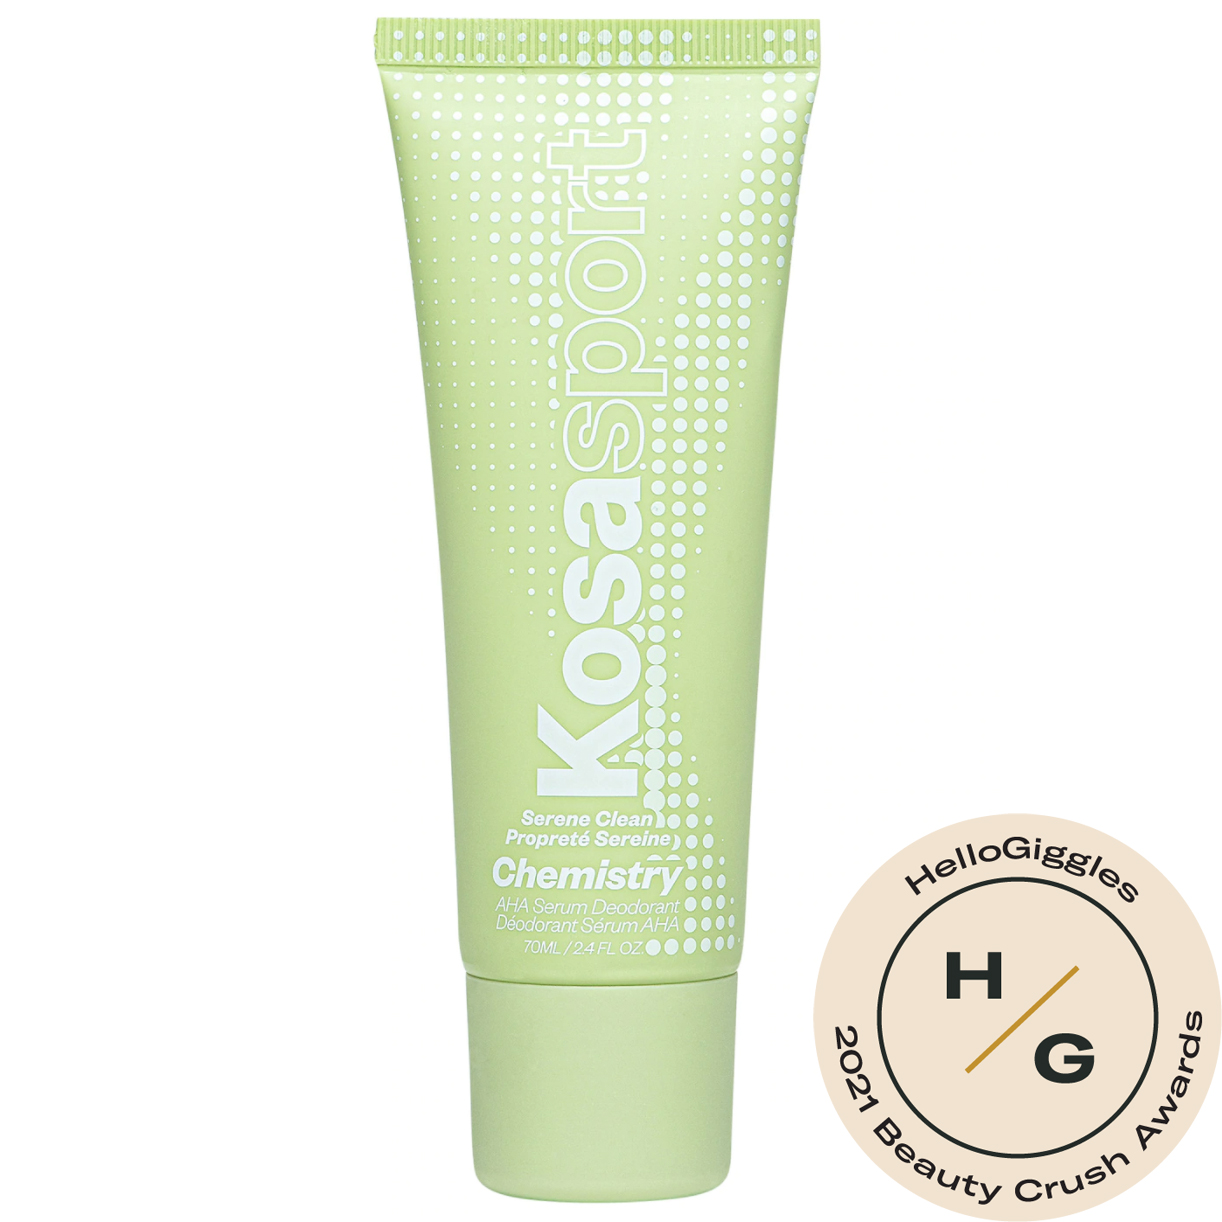 kosas-chemistry-aha-serum-deodorant-review